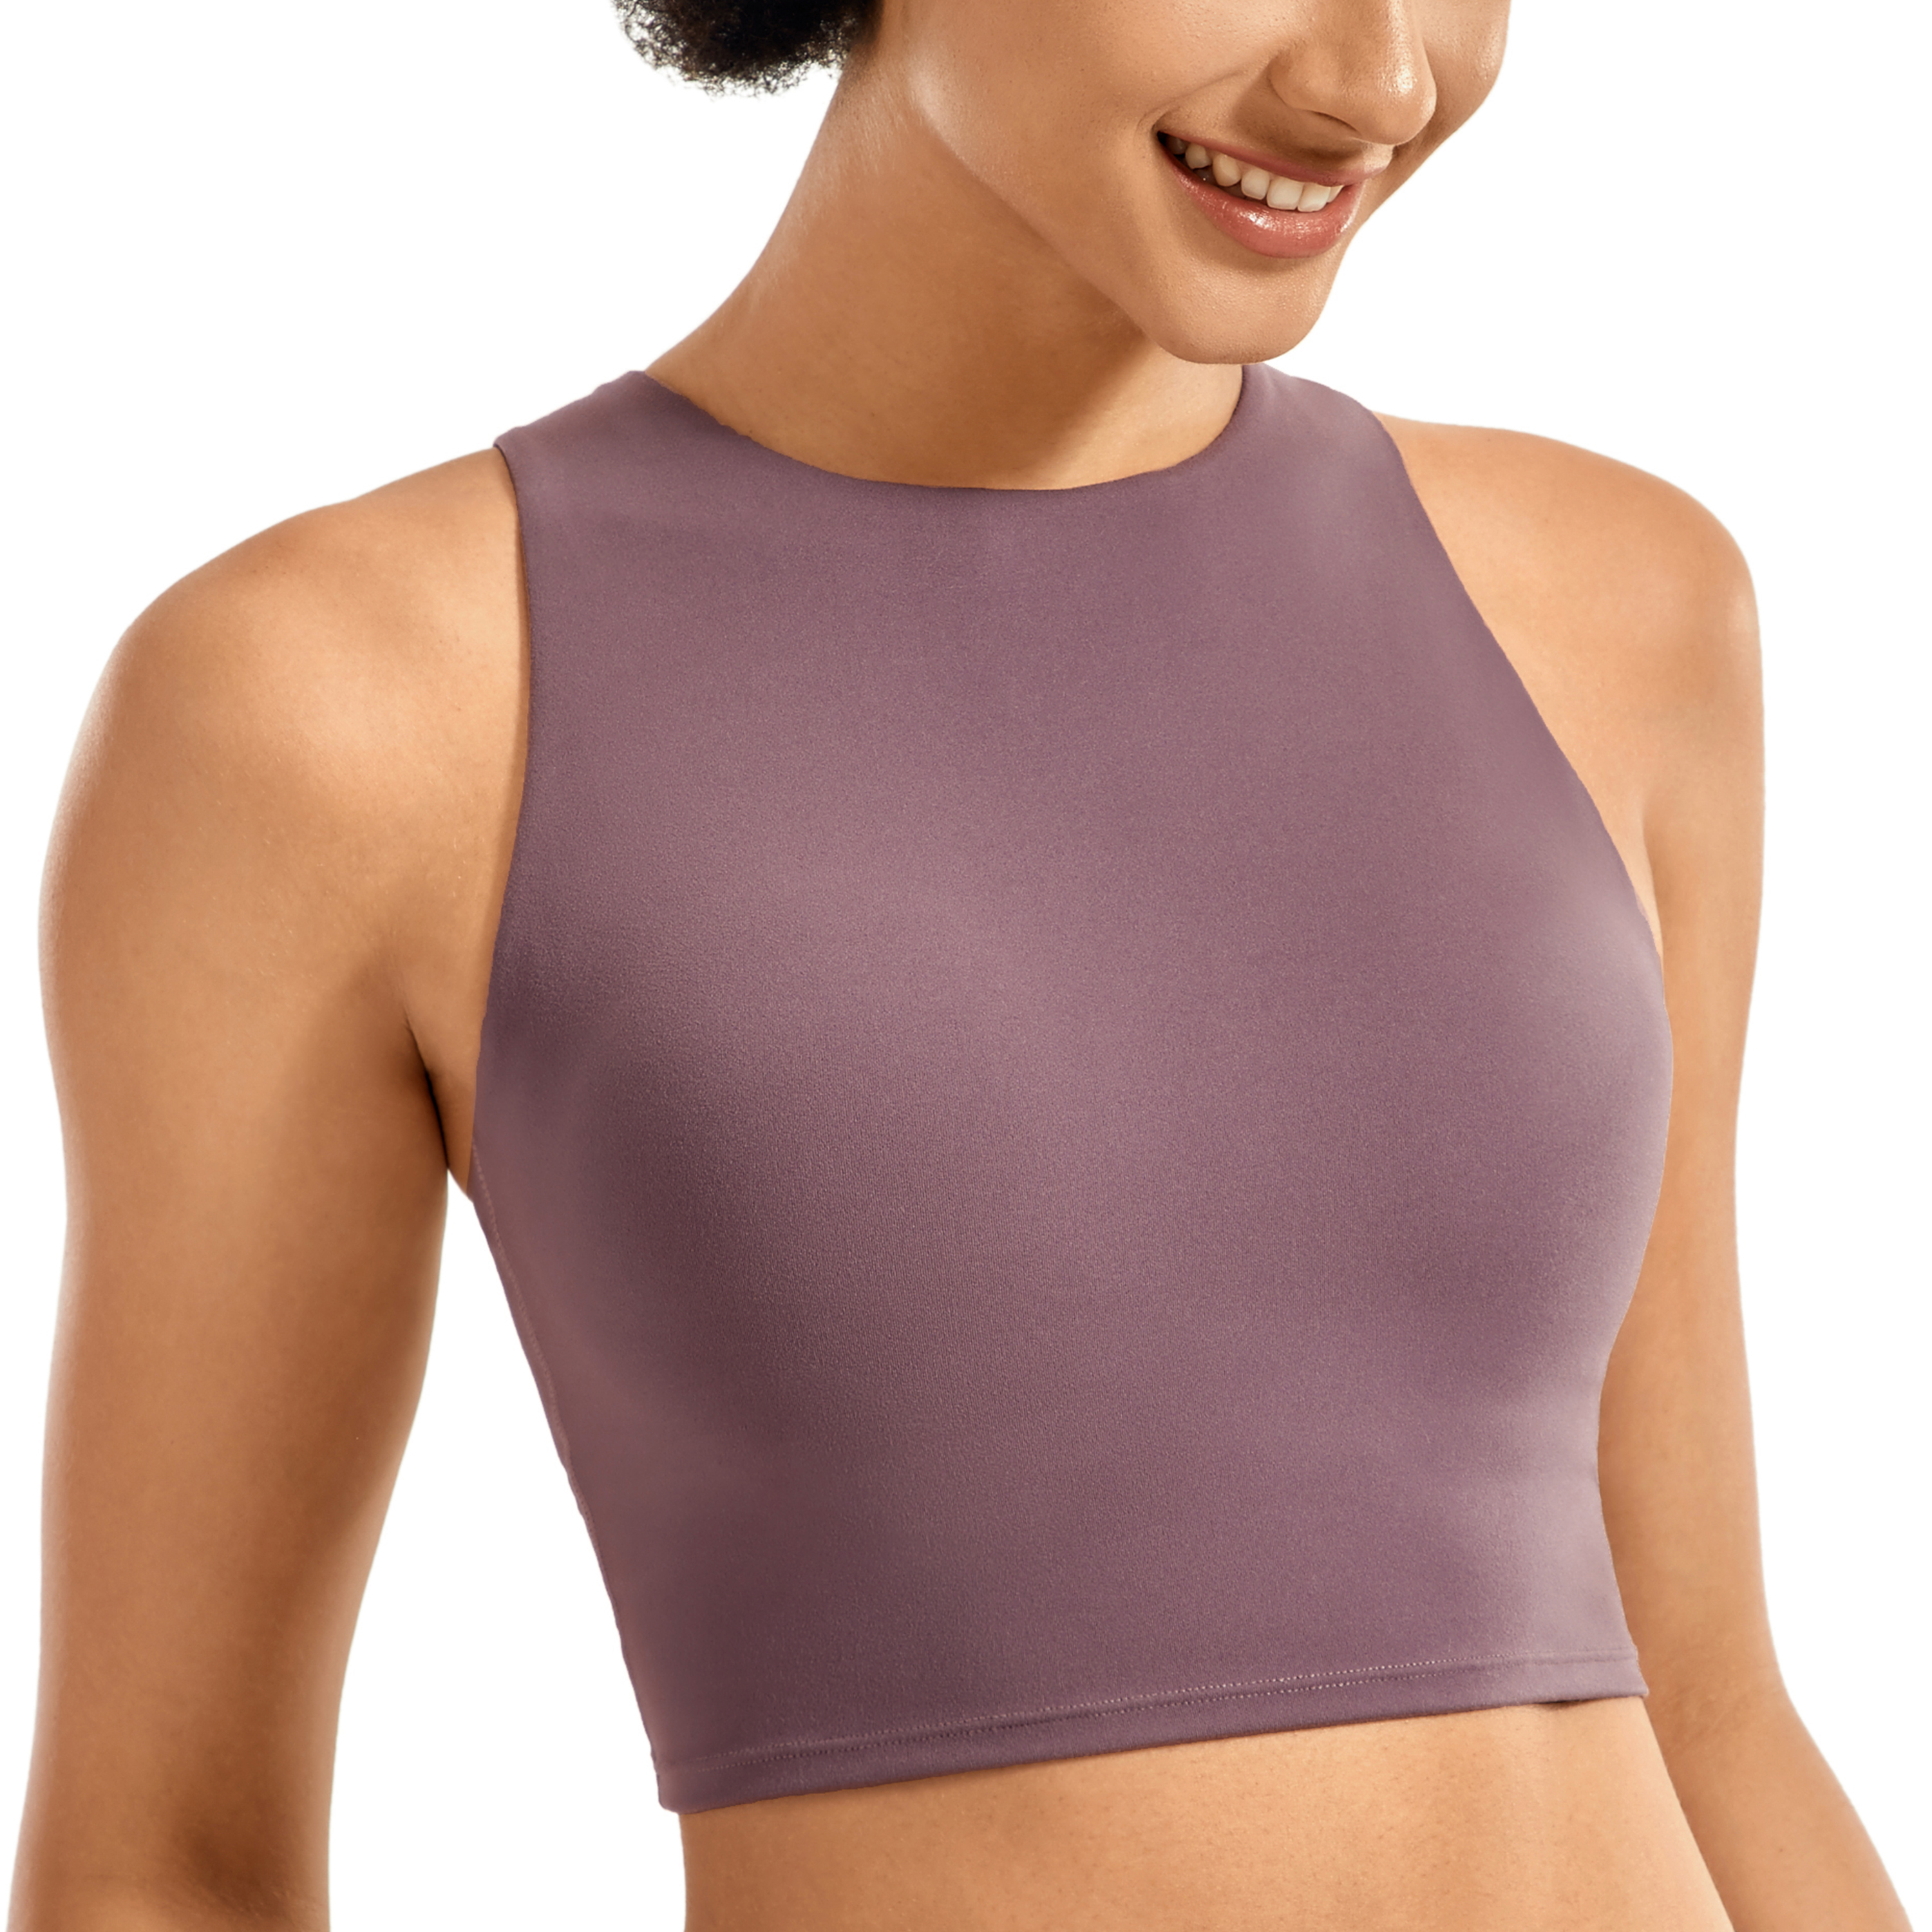 Portazai Womens Sports Bra Tops Front Cross Solid Lace Crop Tank Vest Tops Sleeveless Blouses Activewear Yoga Bra 